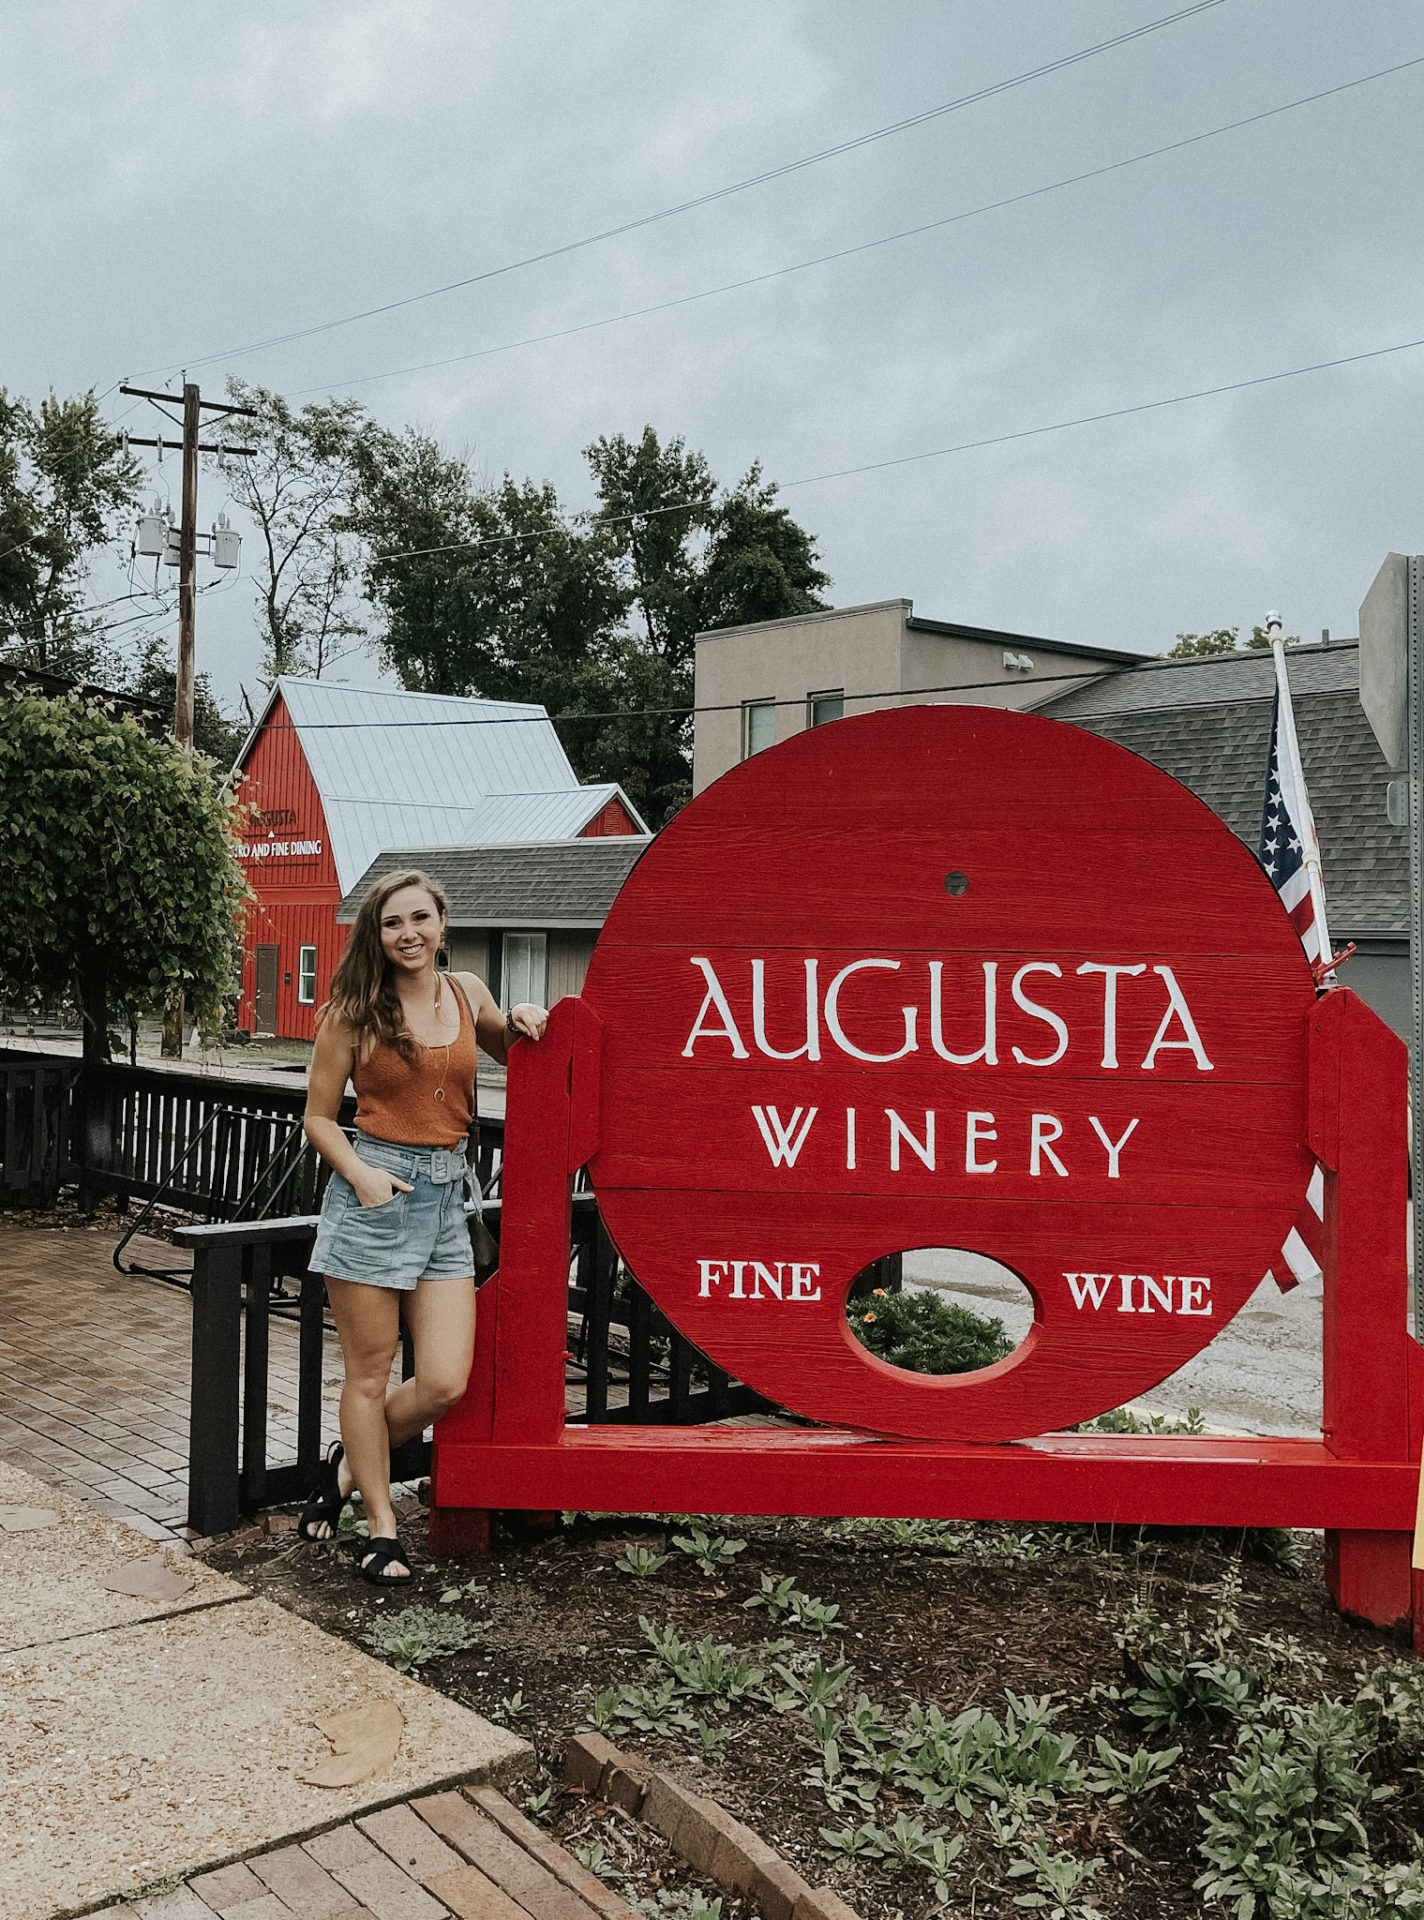 Augusta winery in Missouri